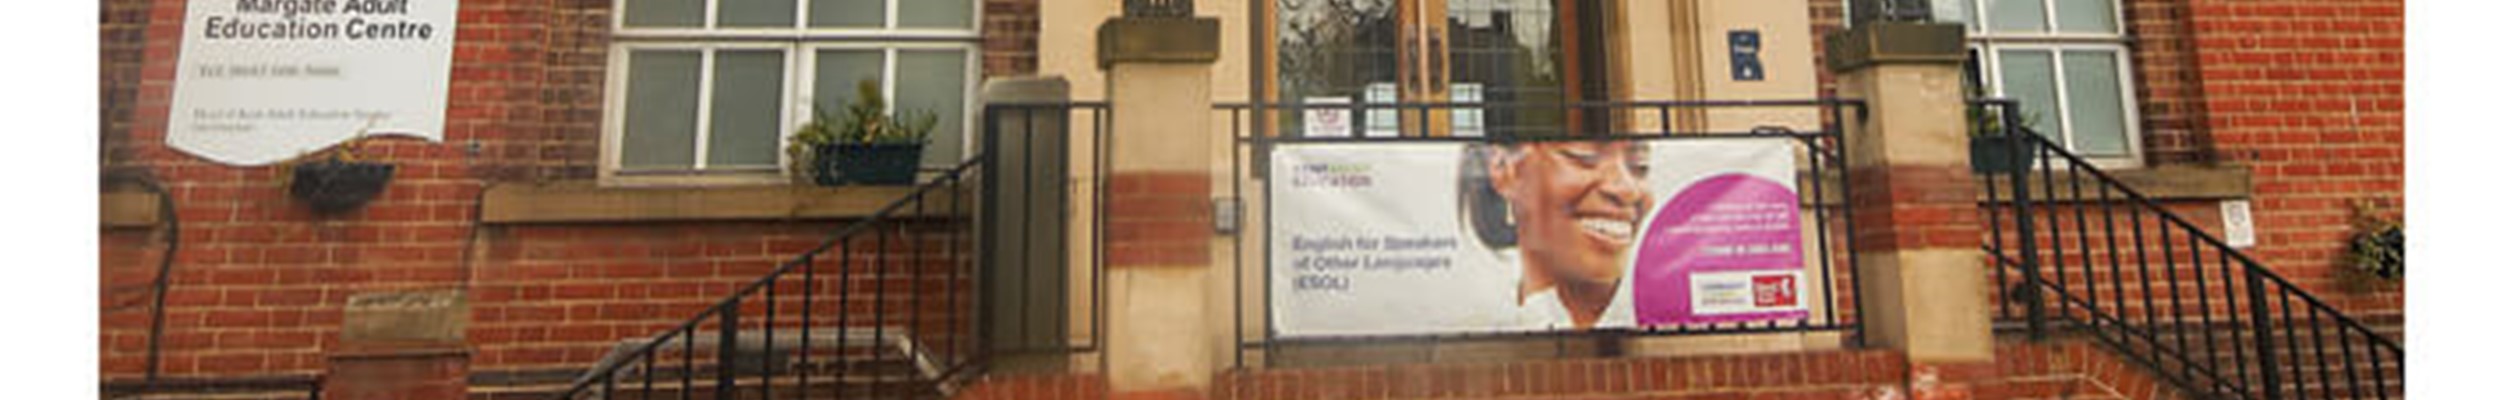 Margate Adult Education Centre